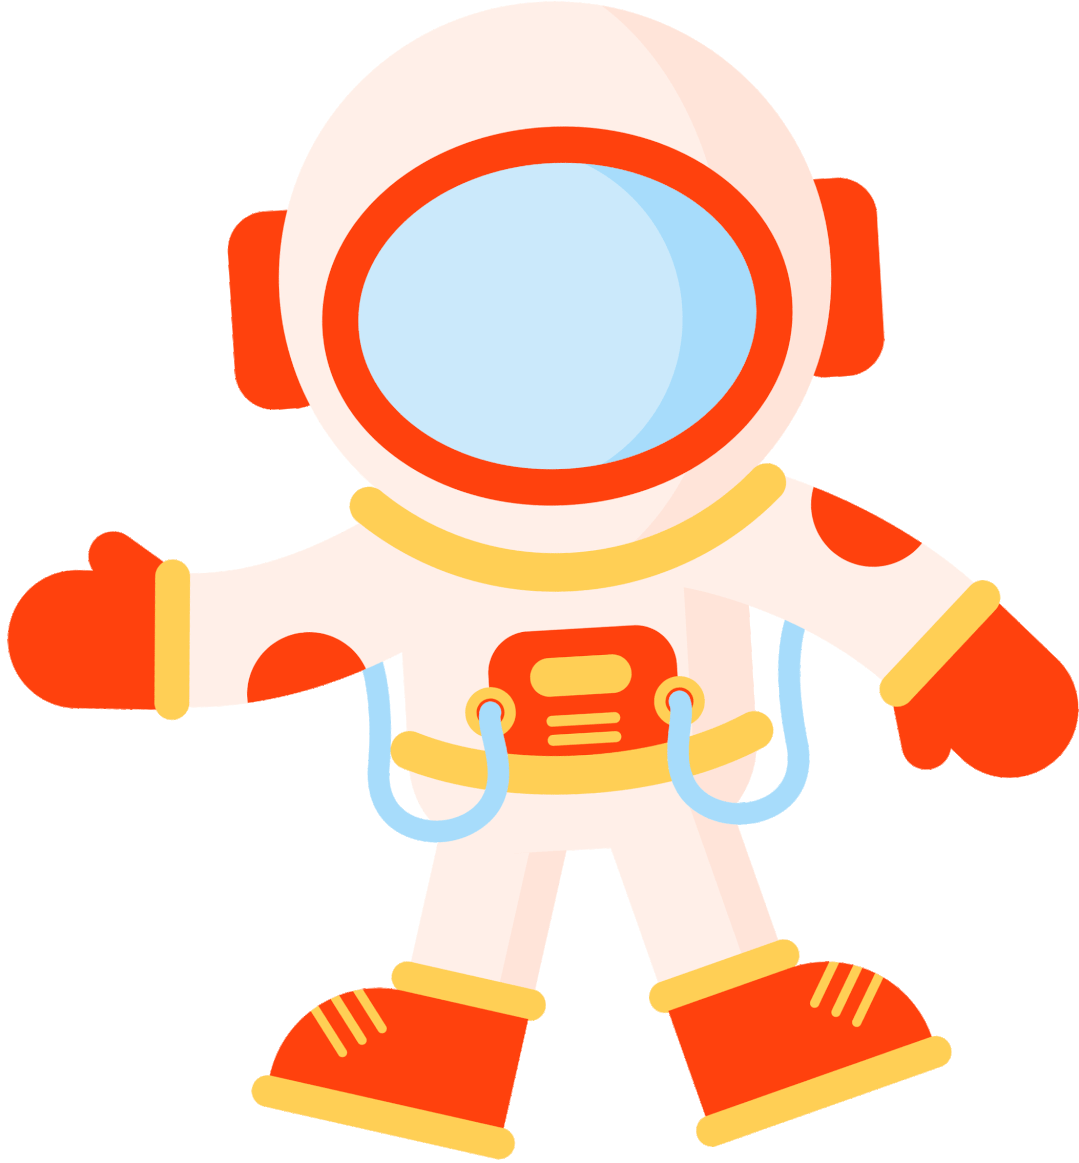 Toyo Robot